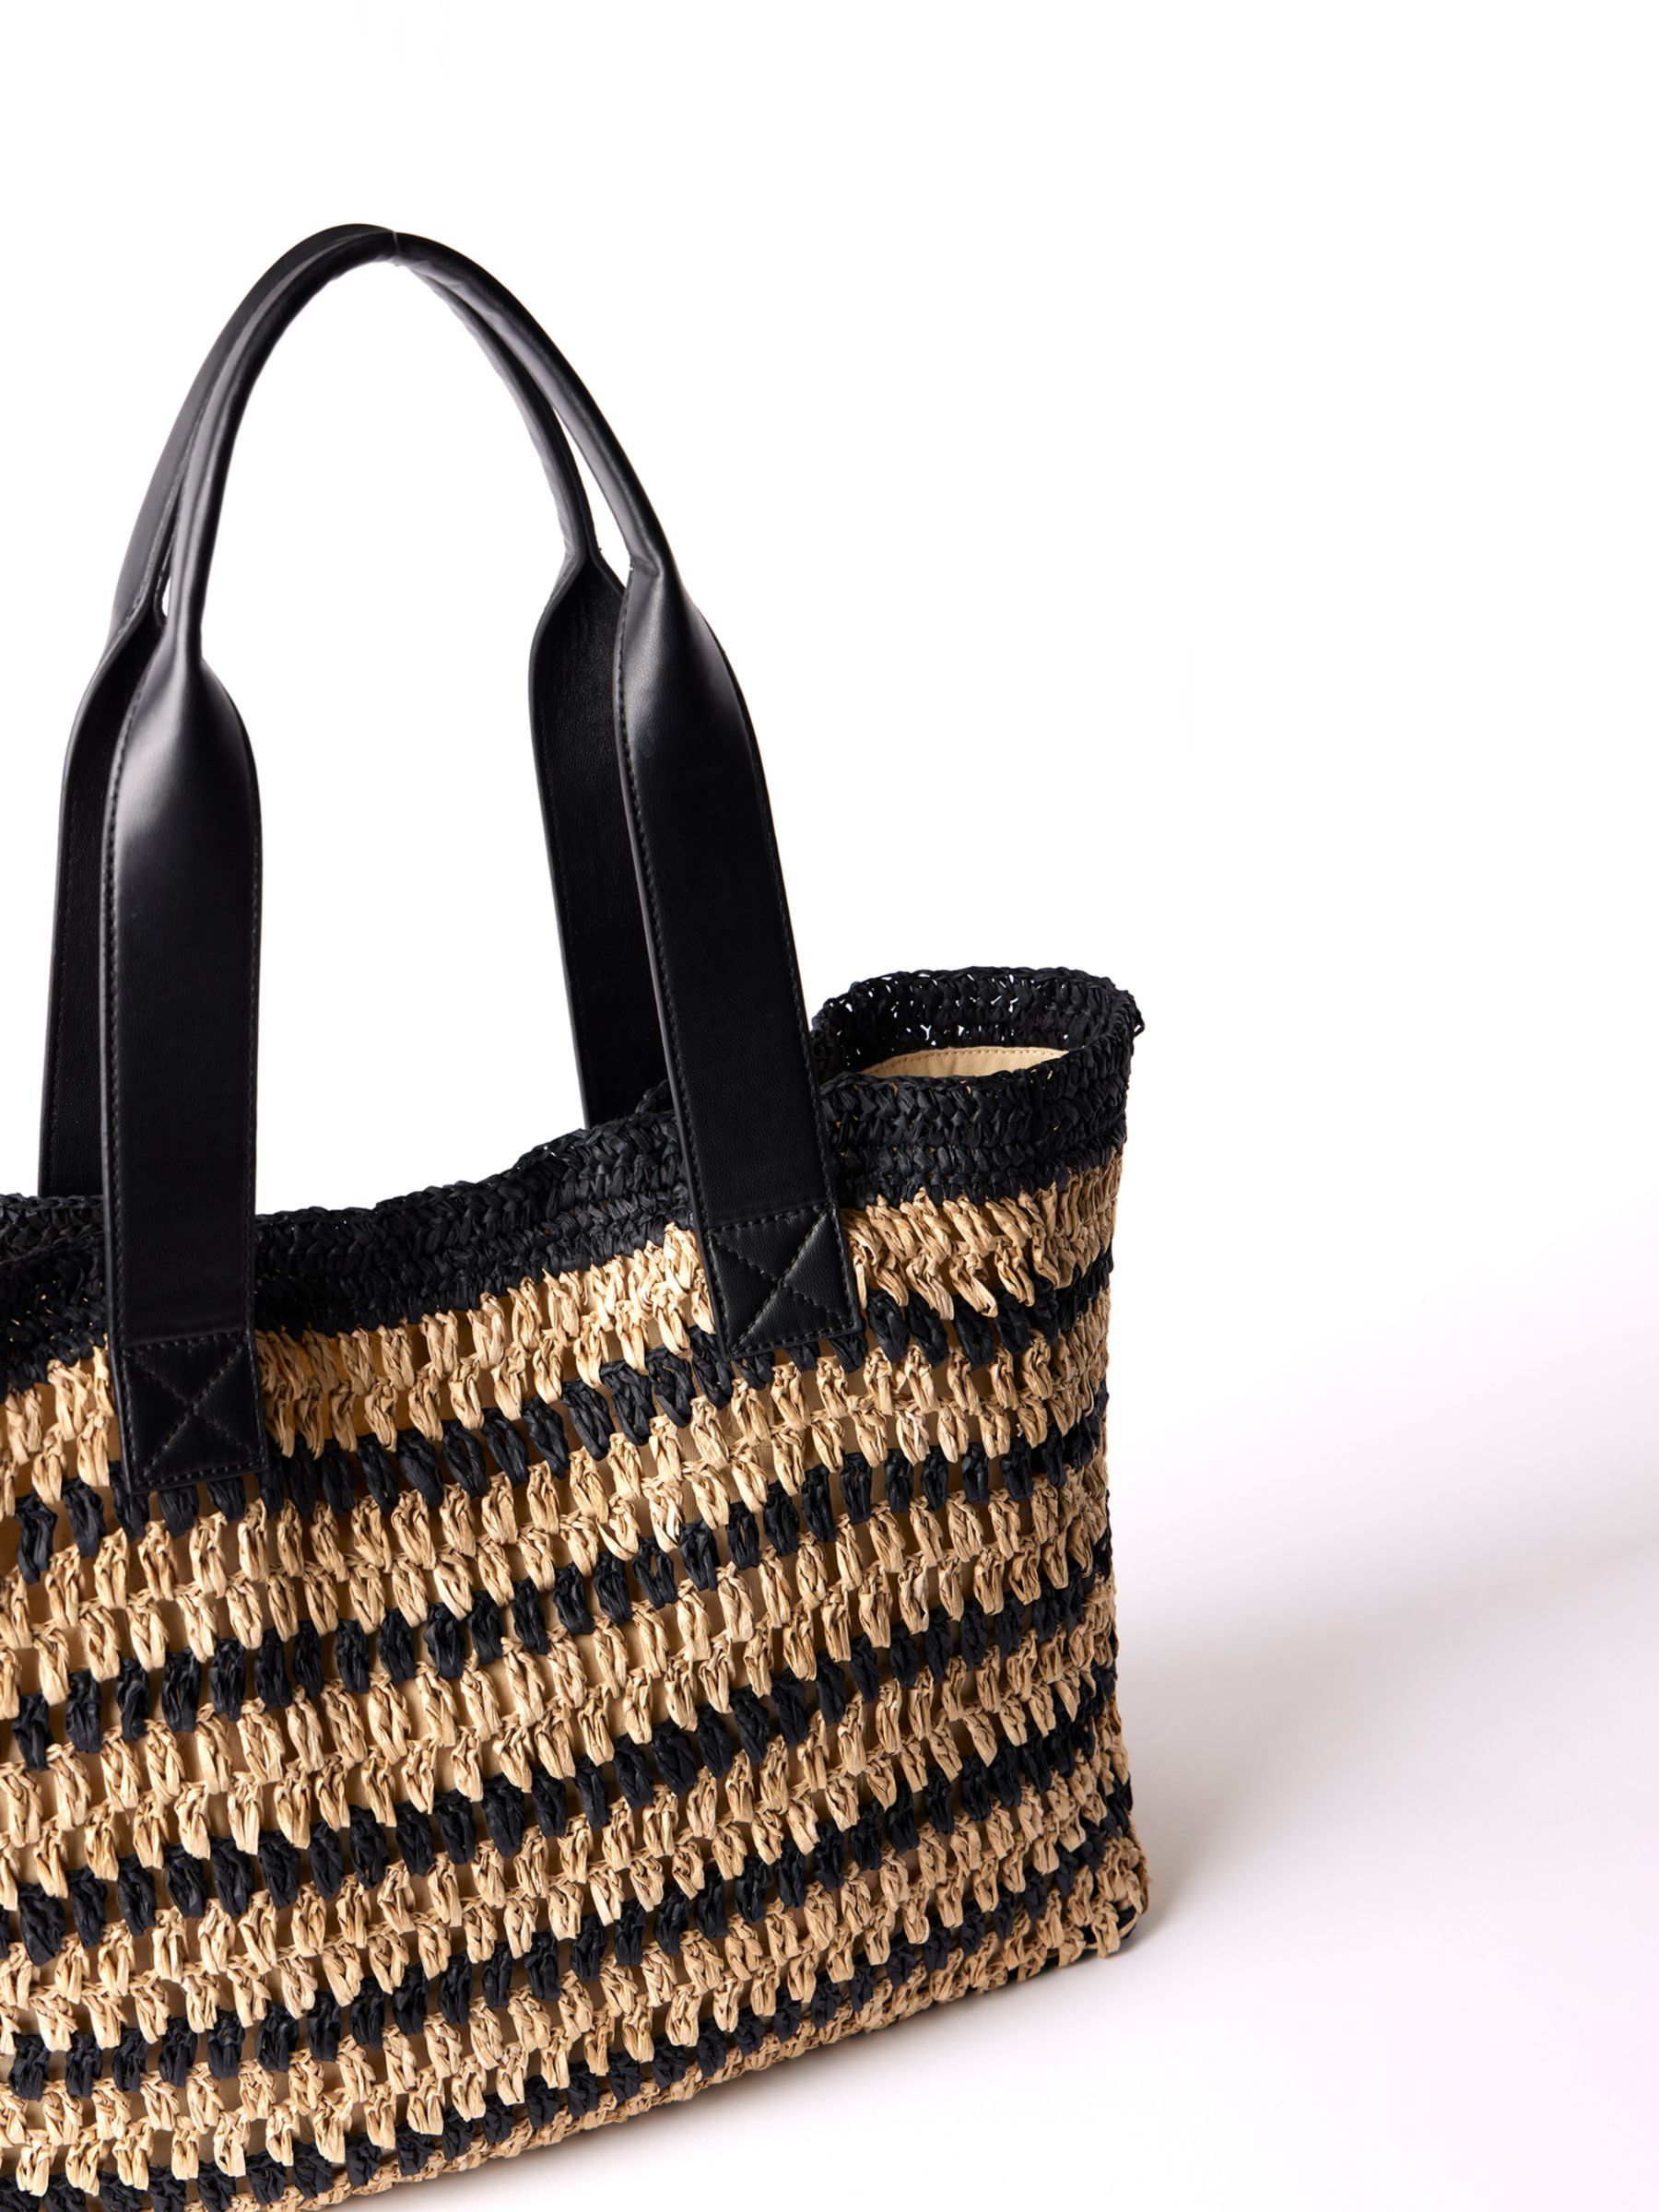 Mint Velvet Woven Striped Tote Bag, Black/Natural, One Size